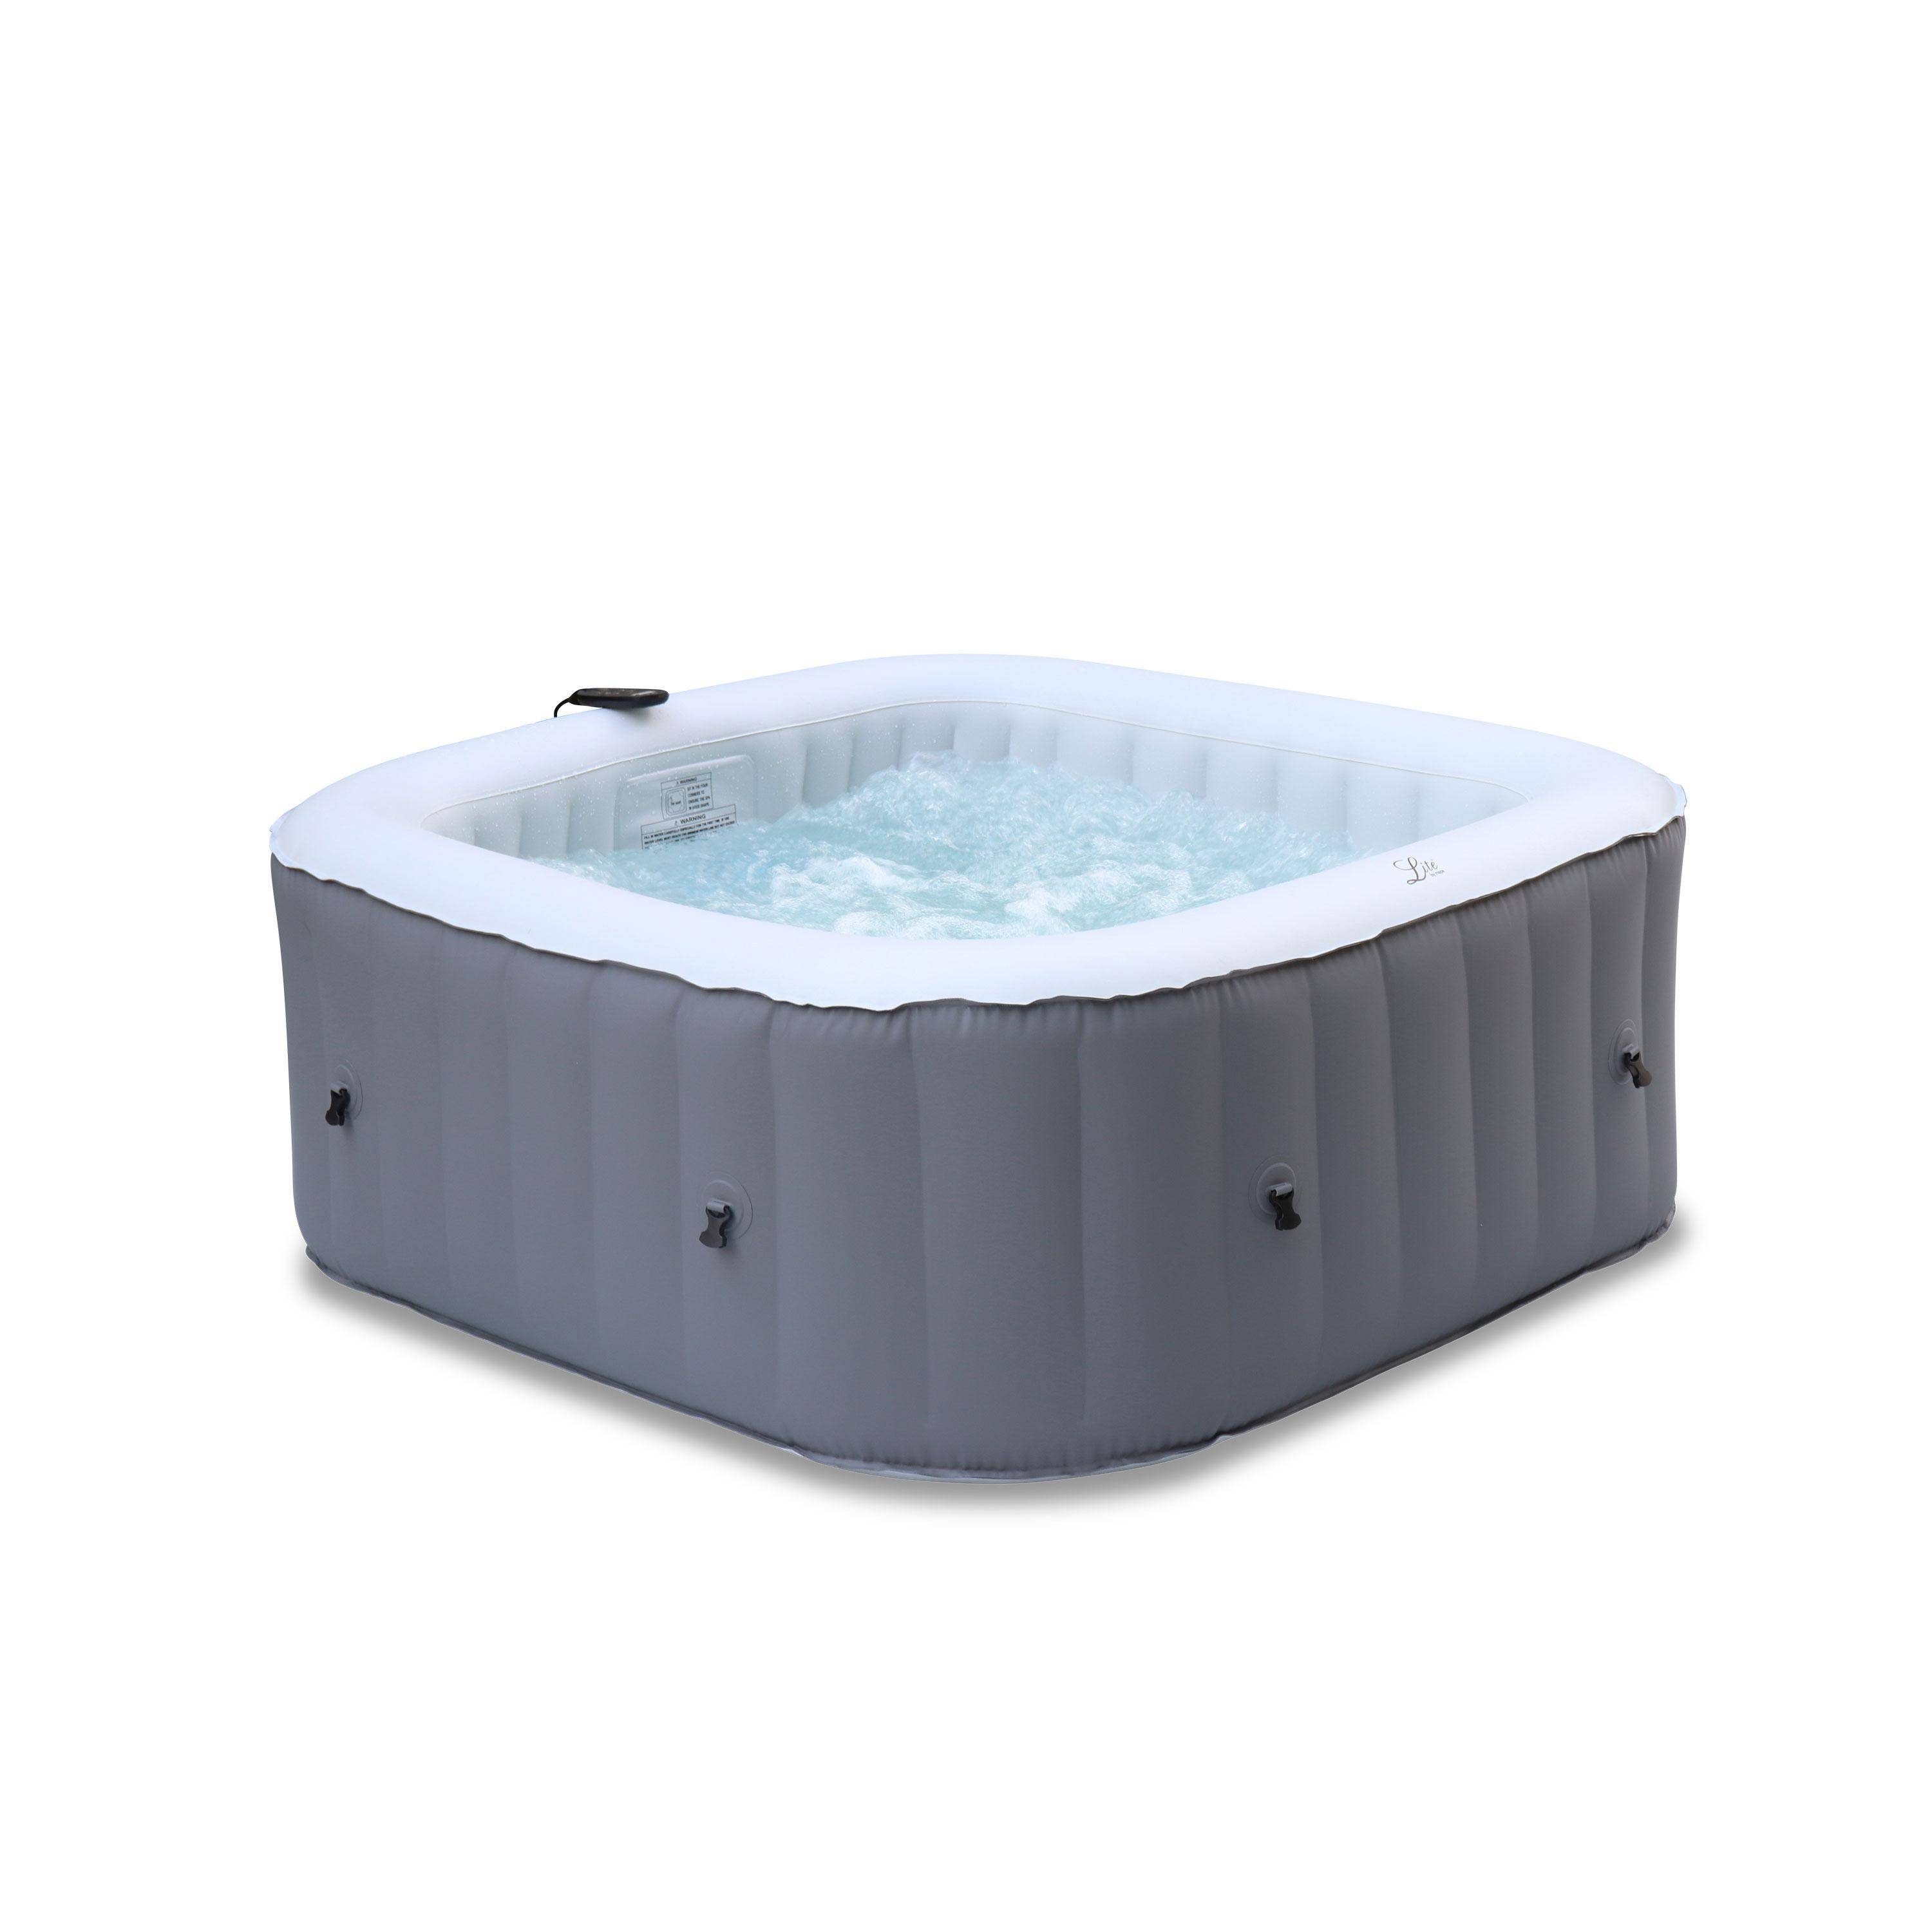 4-person square inflatable hot tub MSpa - 160cm square 4-person spa, PVC, pump, heater, filter, remote control - Fjord 4 - Grey,sweeek,Photo1